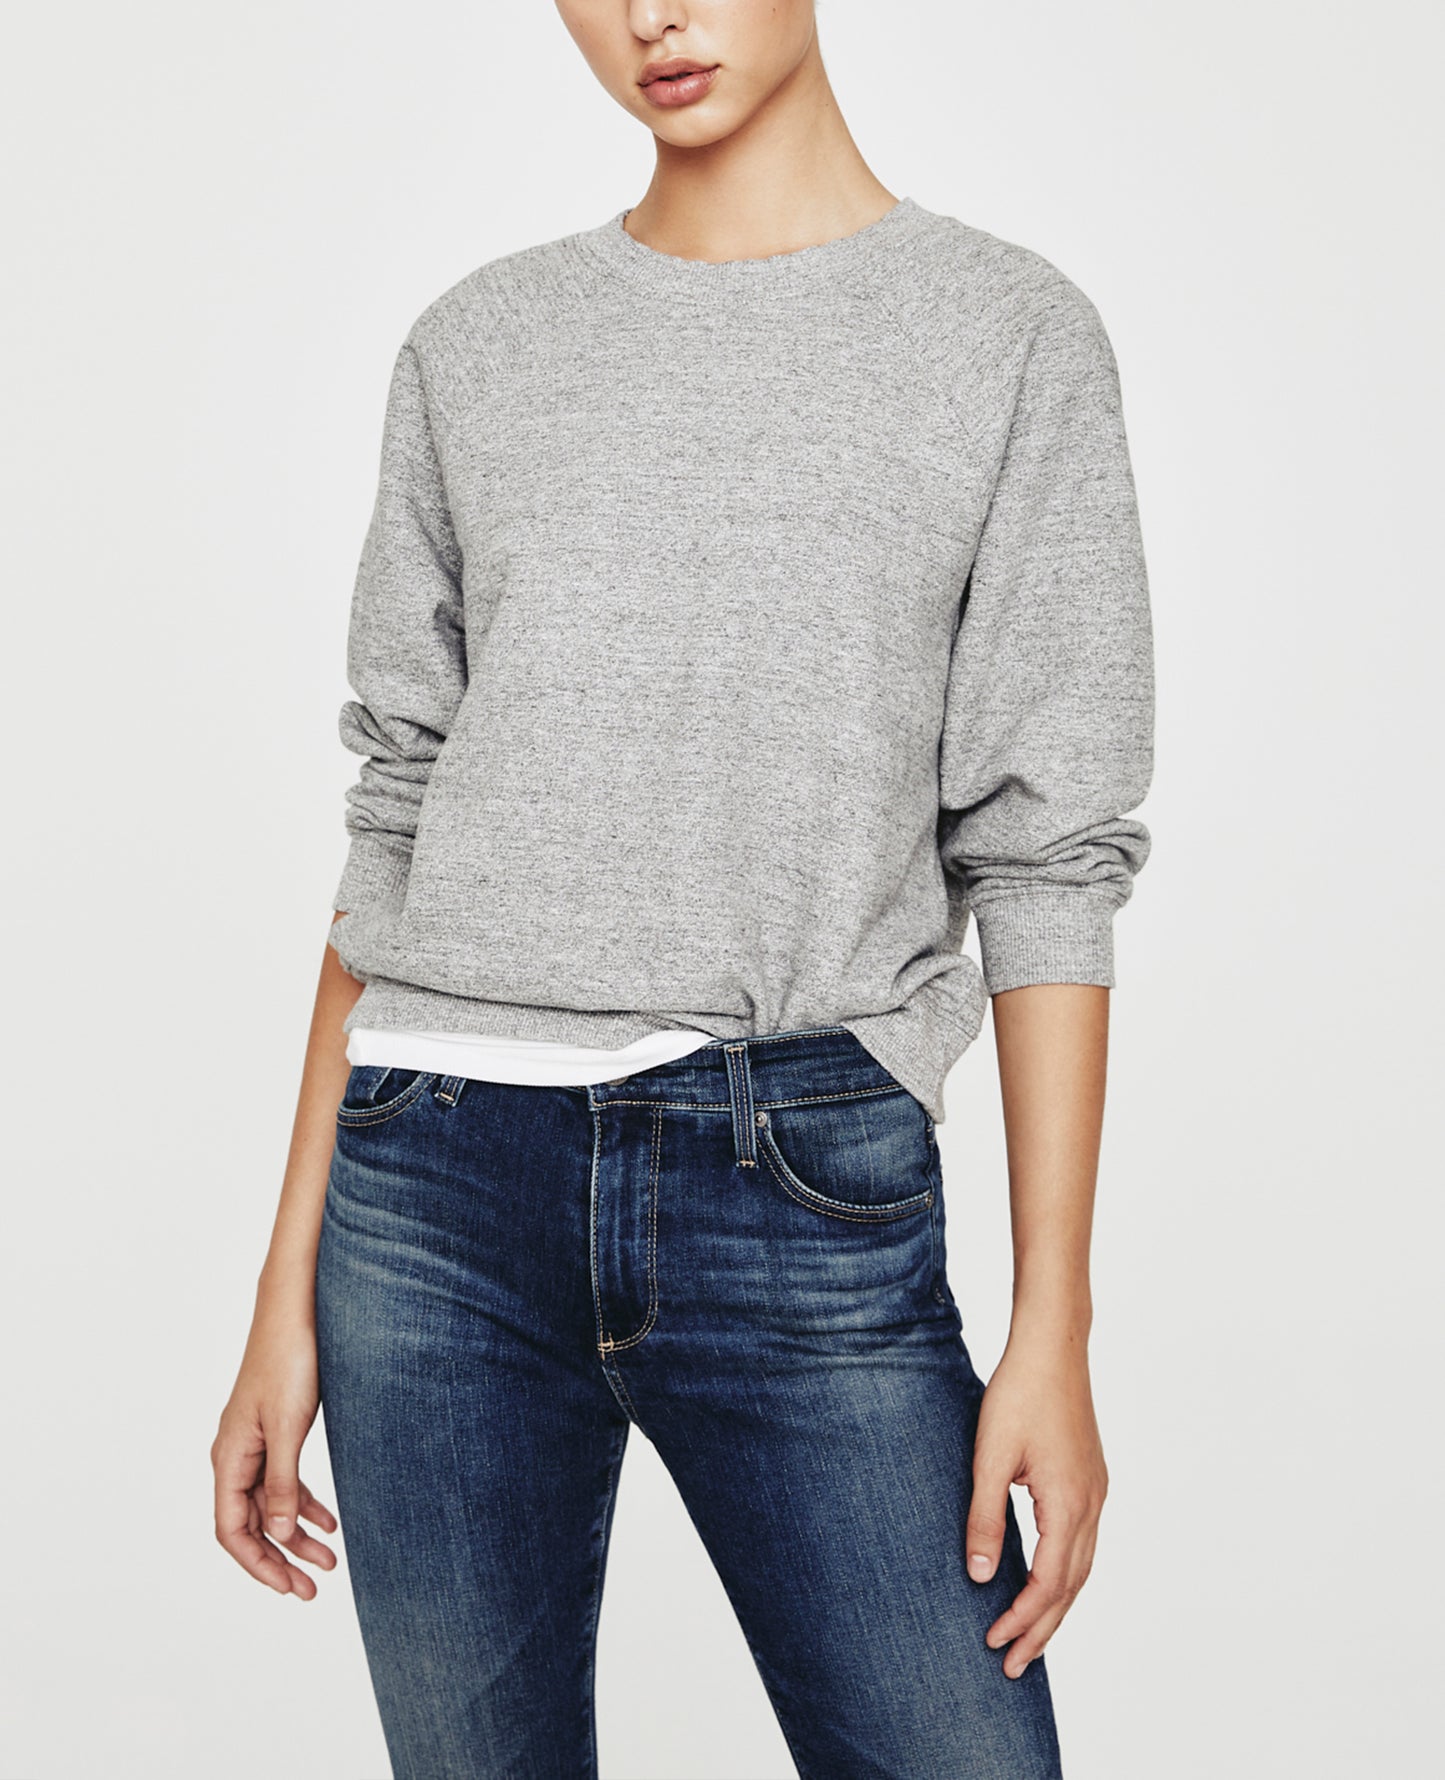 Jadyn Sweatshirt Heather Grey Vintage Sweatshirt Women Tops Photo 1